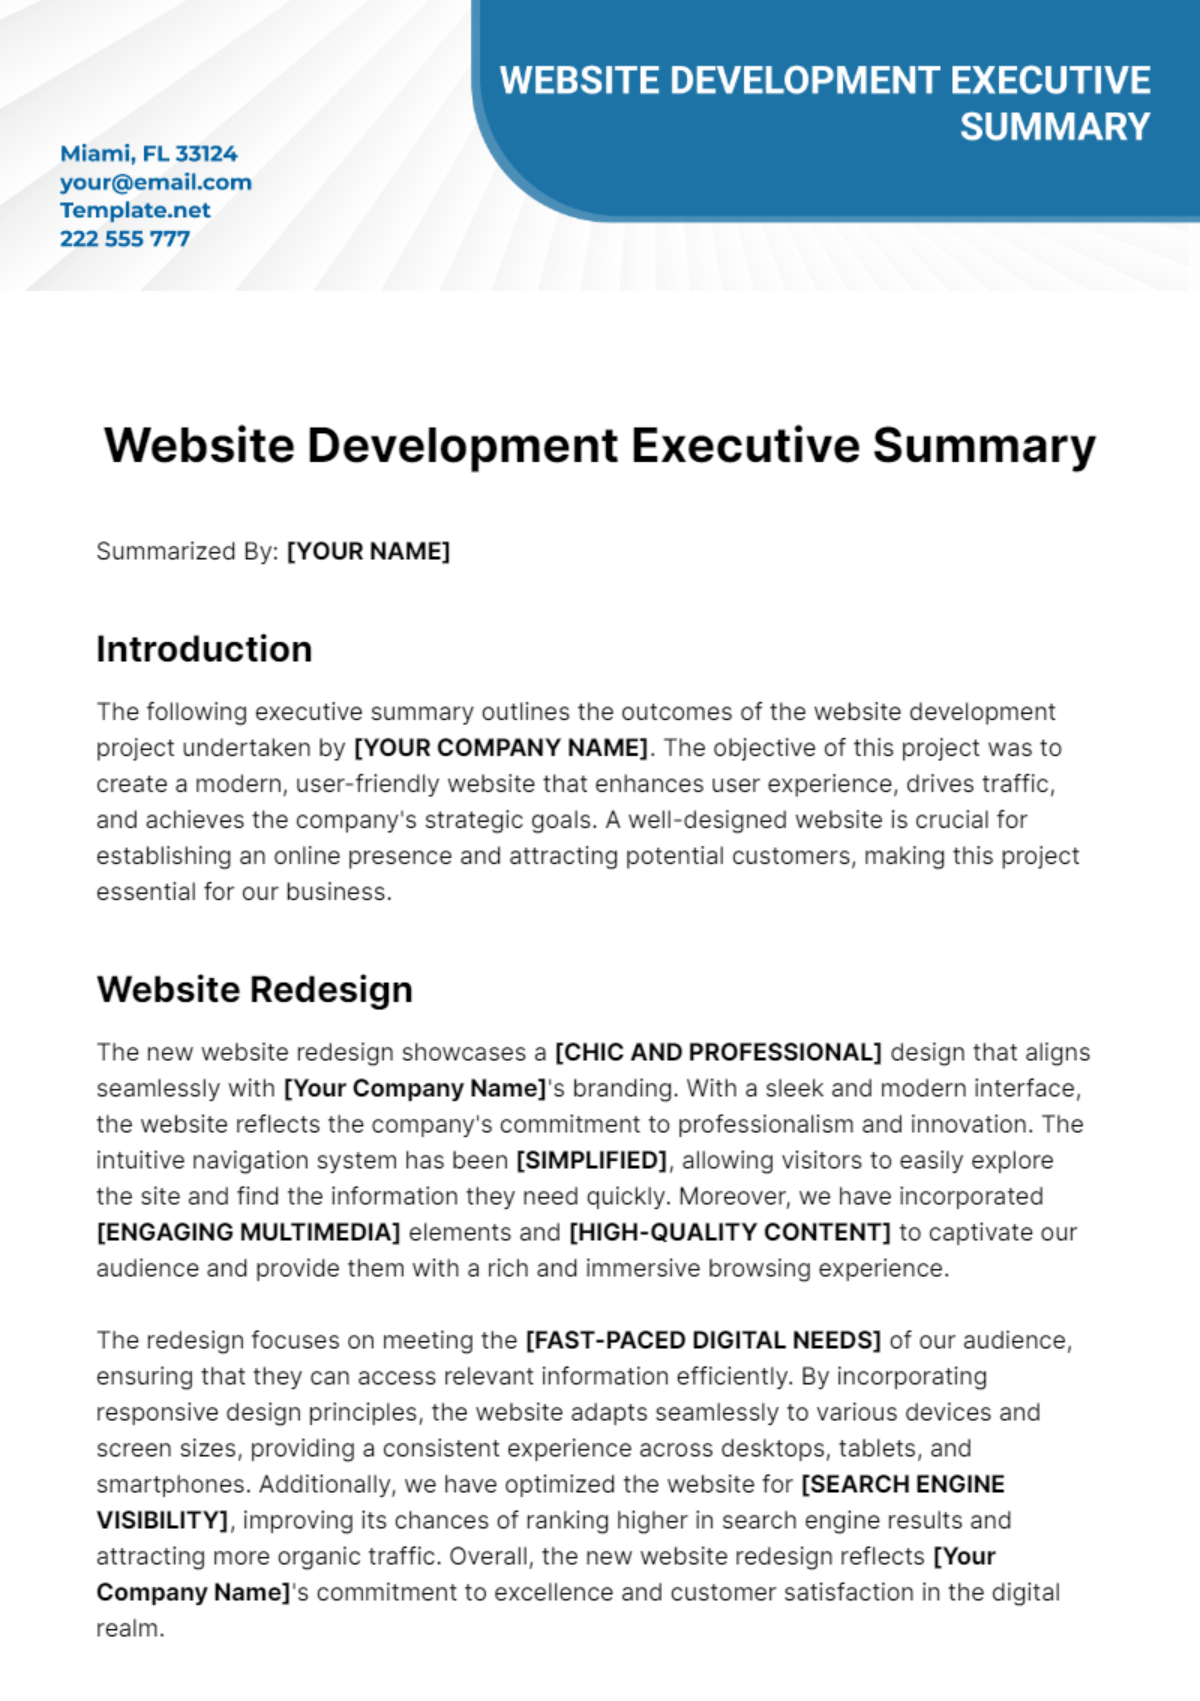 Website Development Executive Summary Template